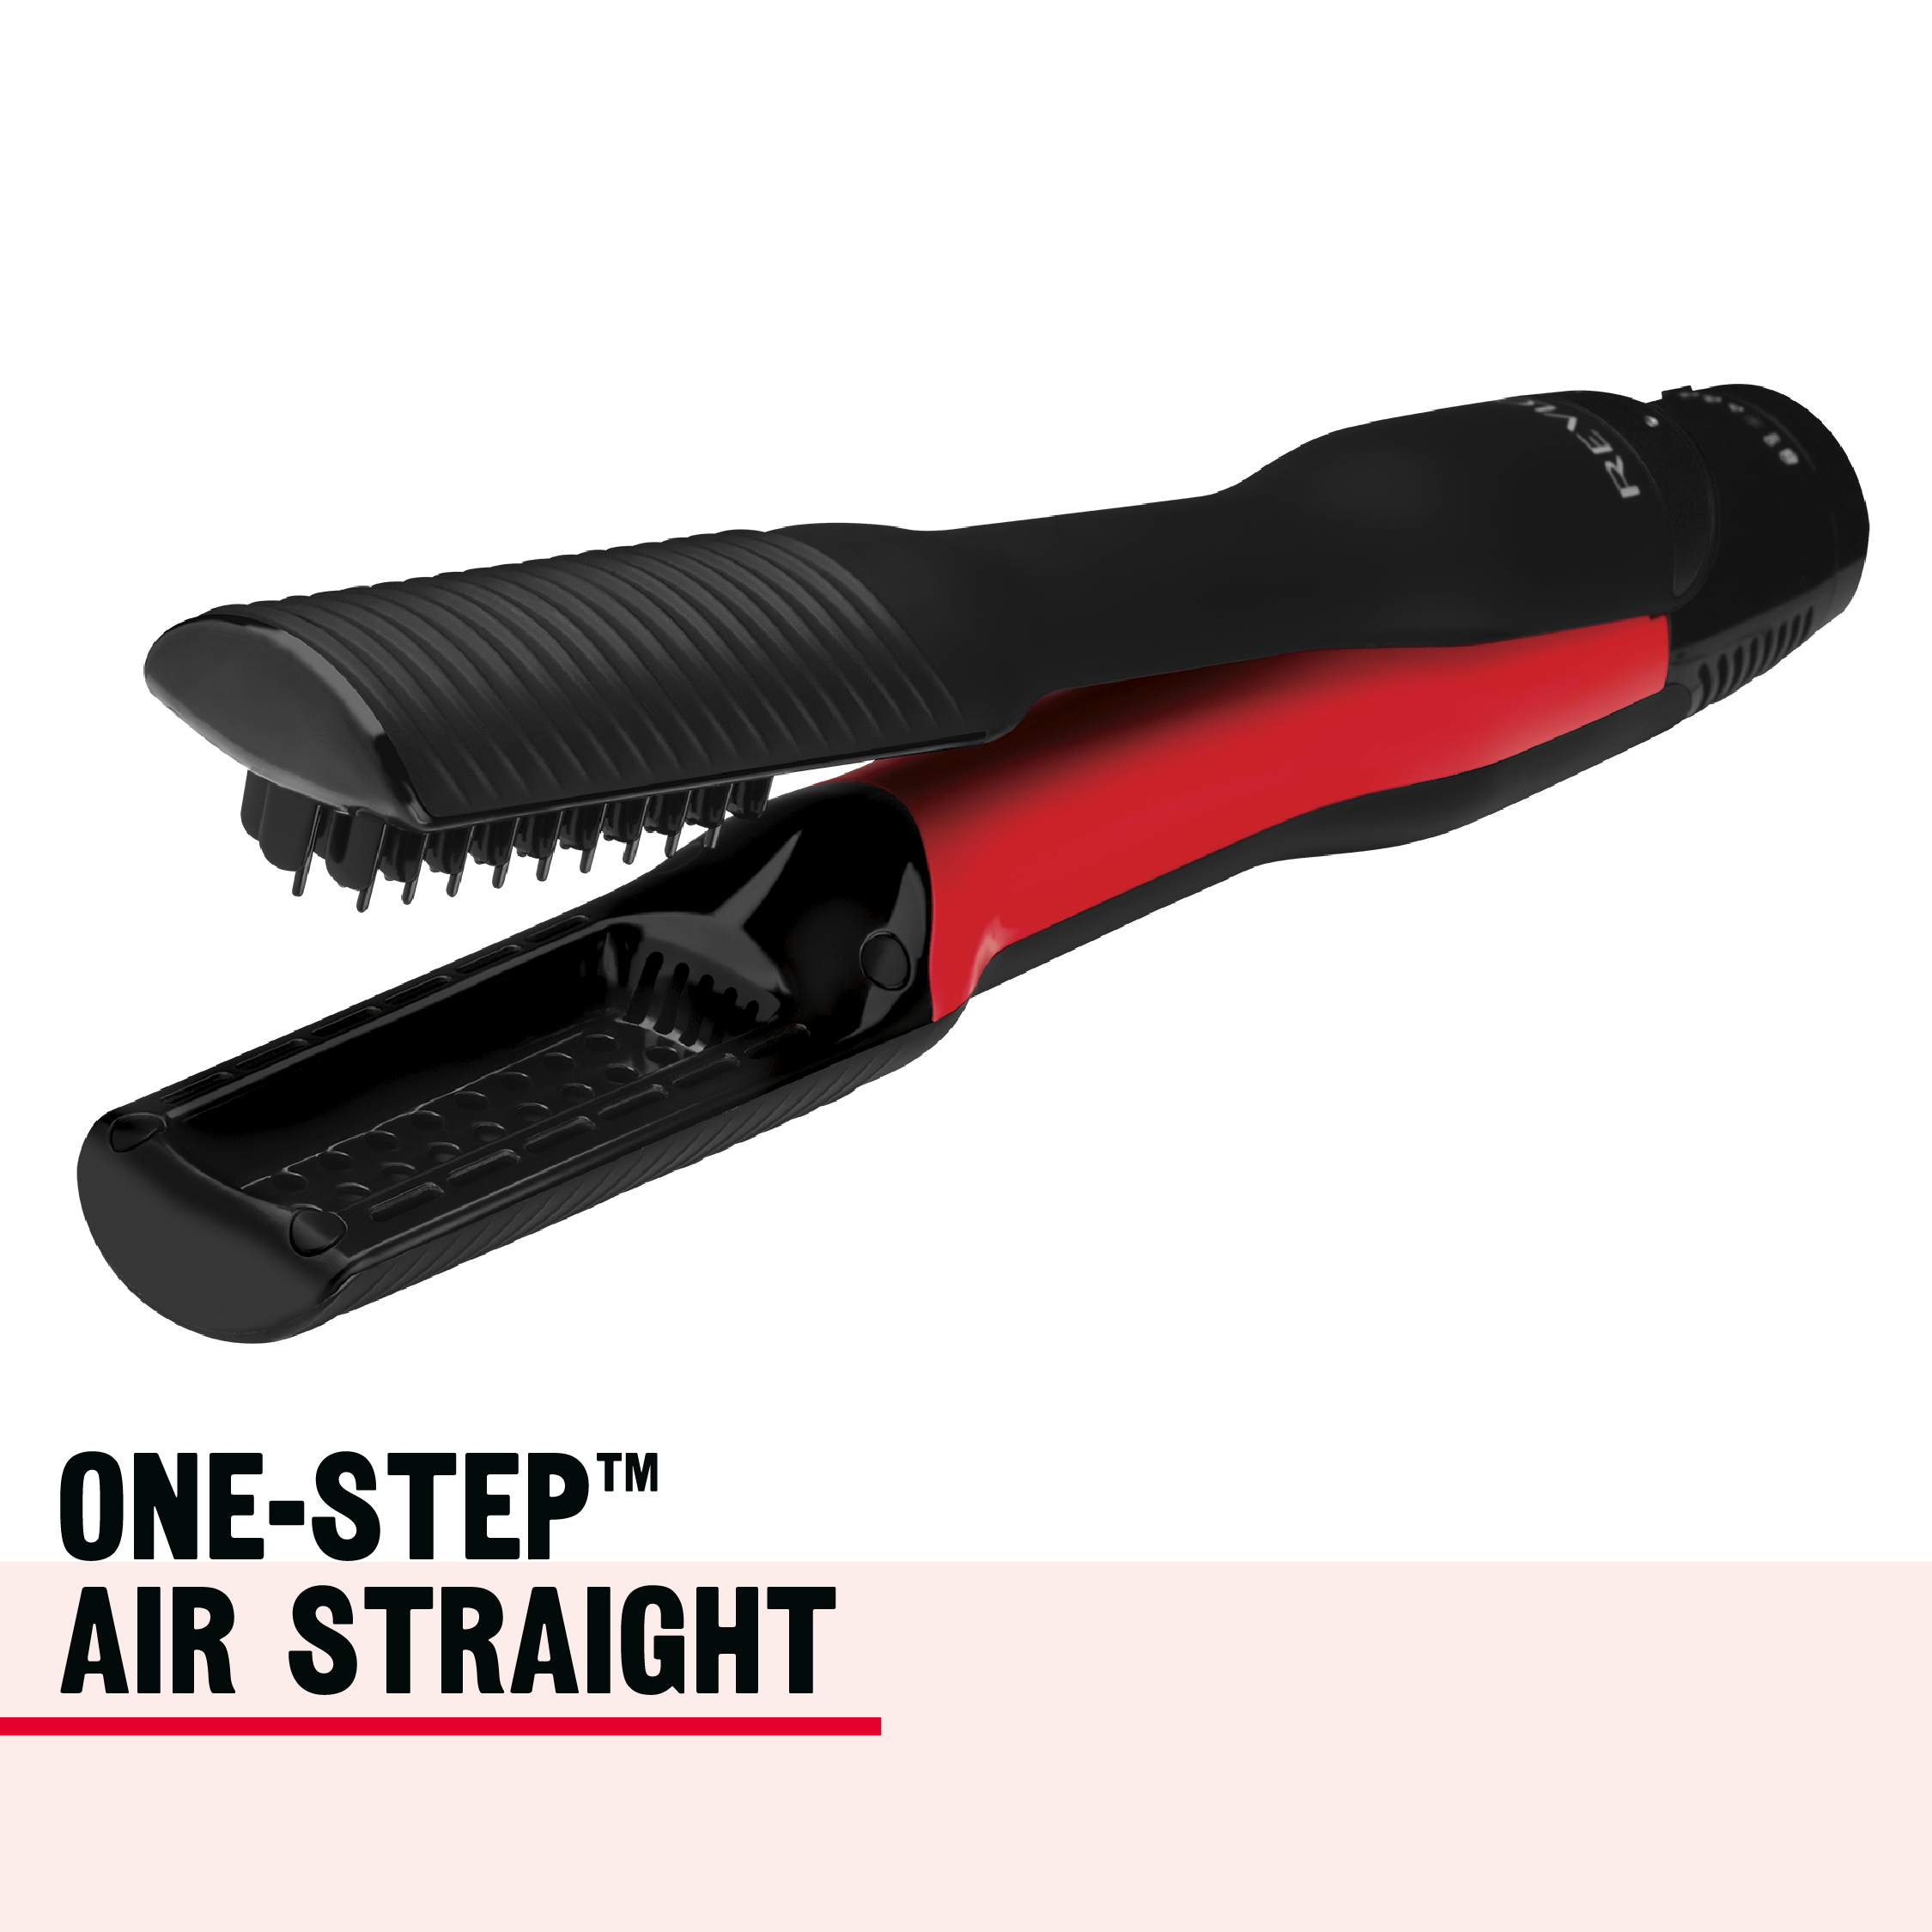 One-Step Air Straight - Revlon